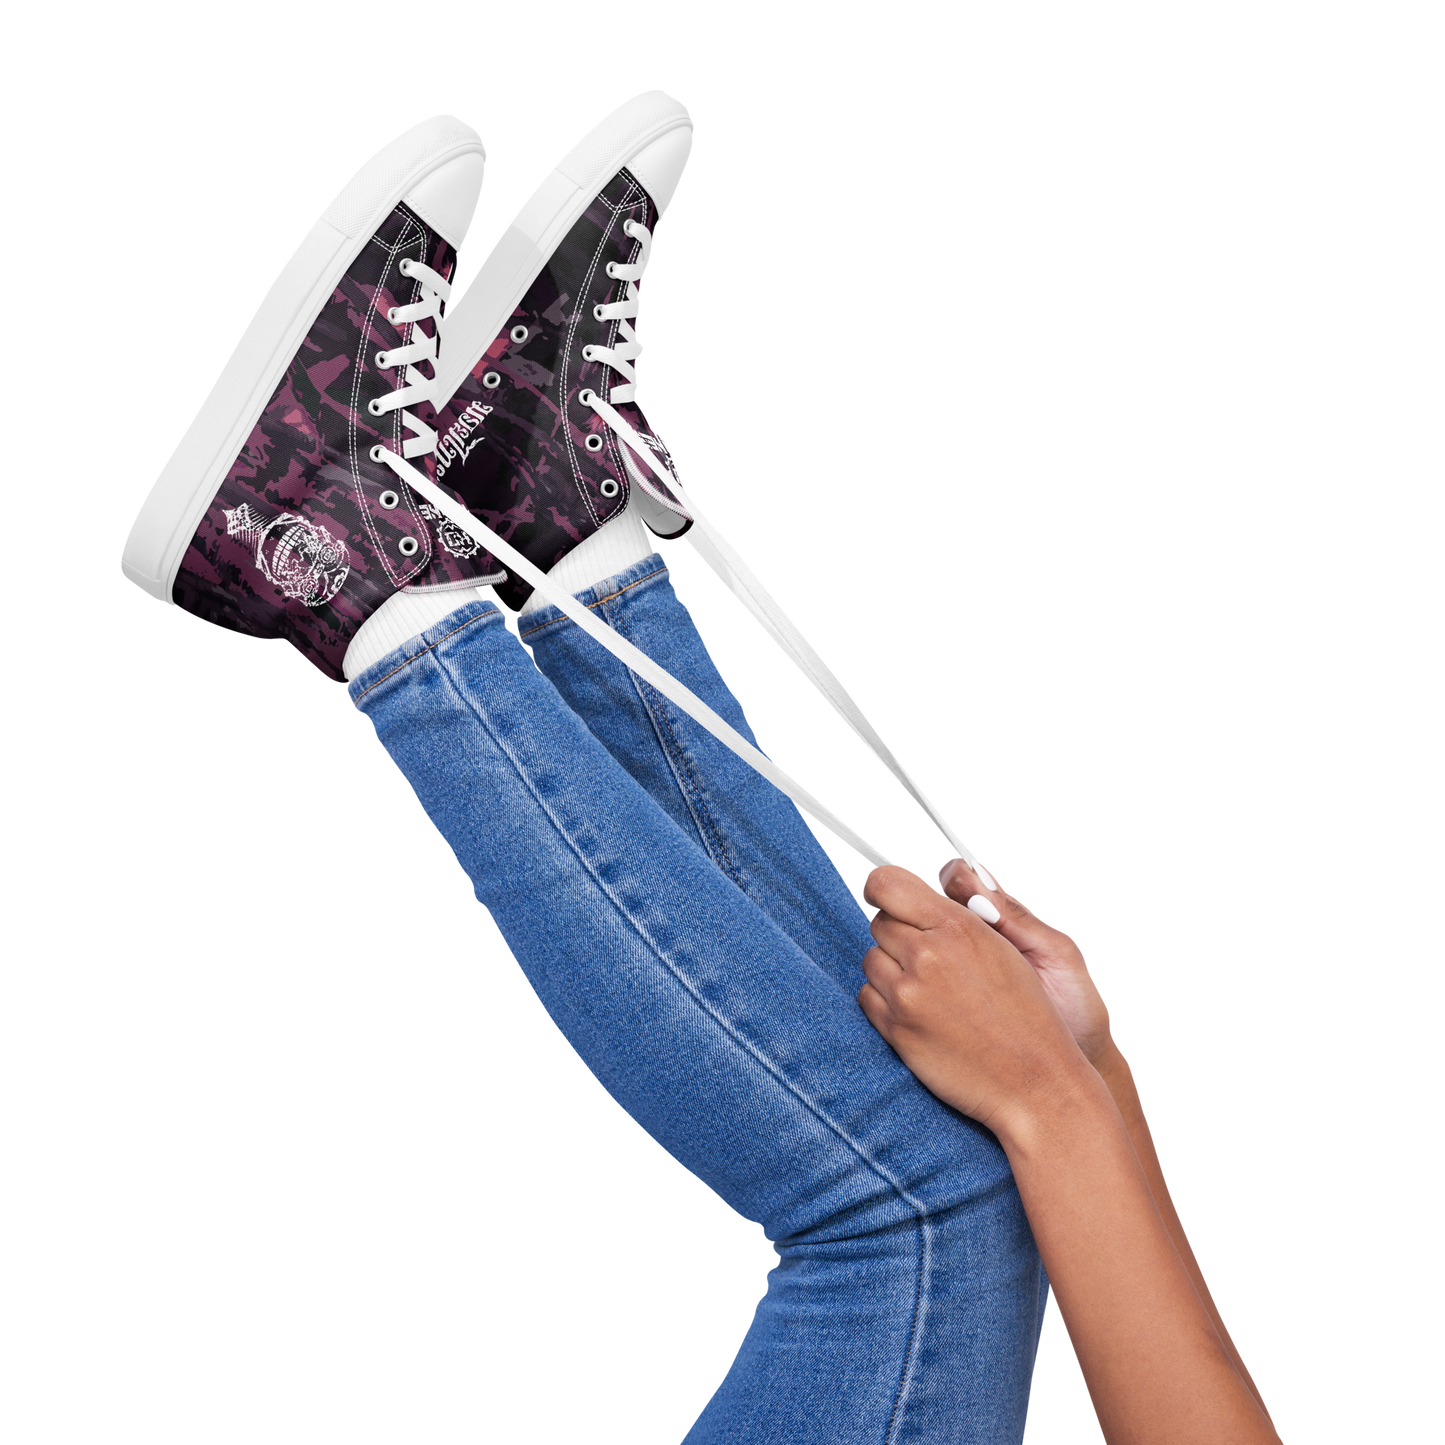 Women’s High Top Canvas Shoes Catrina Purple